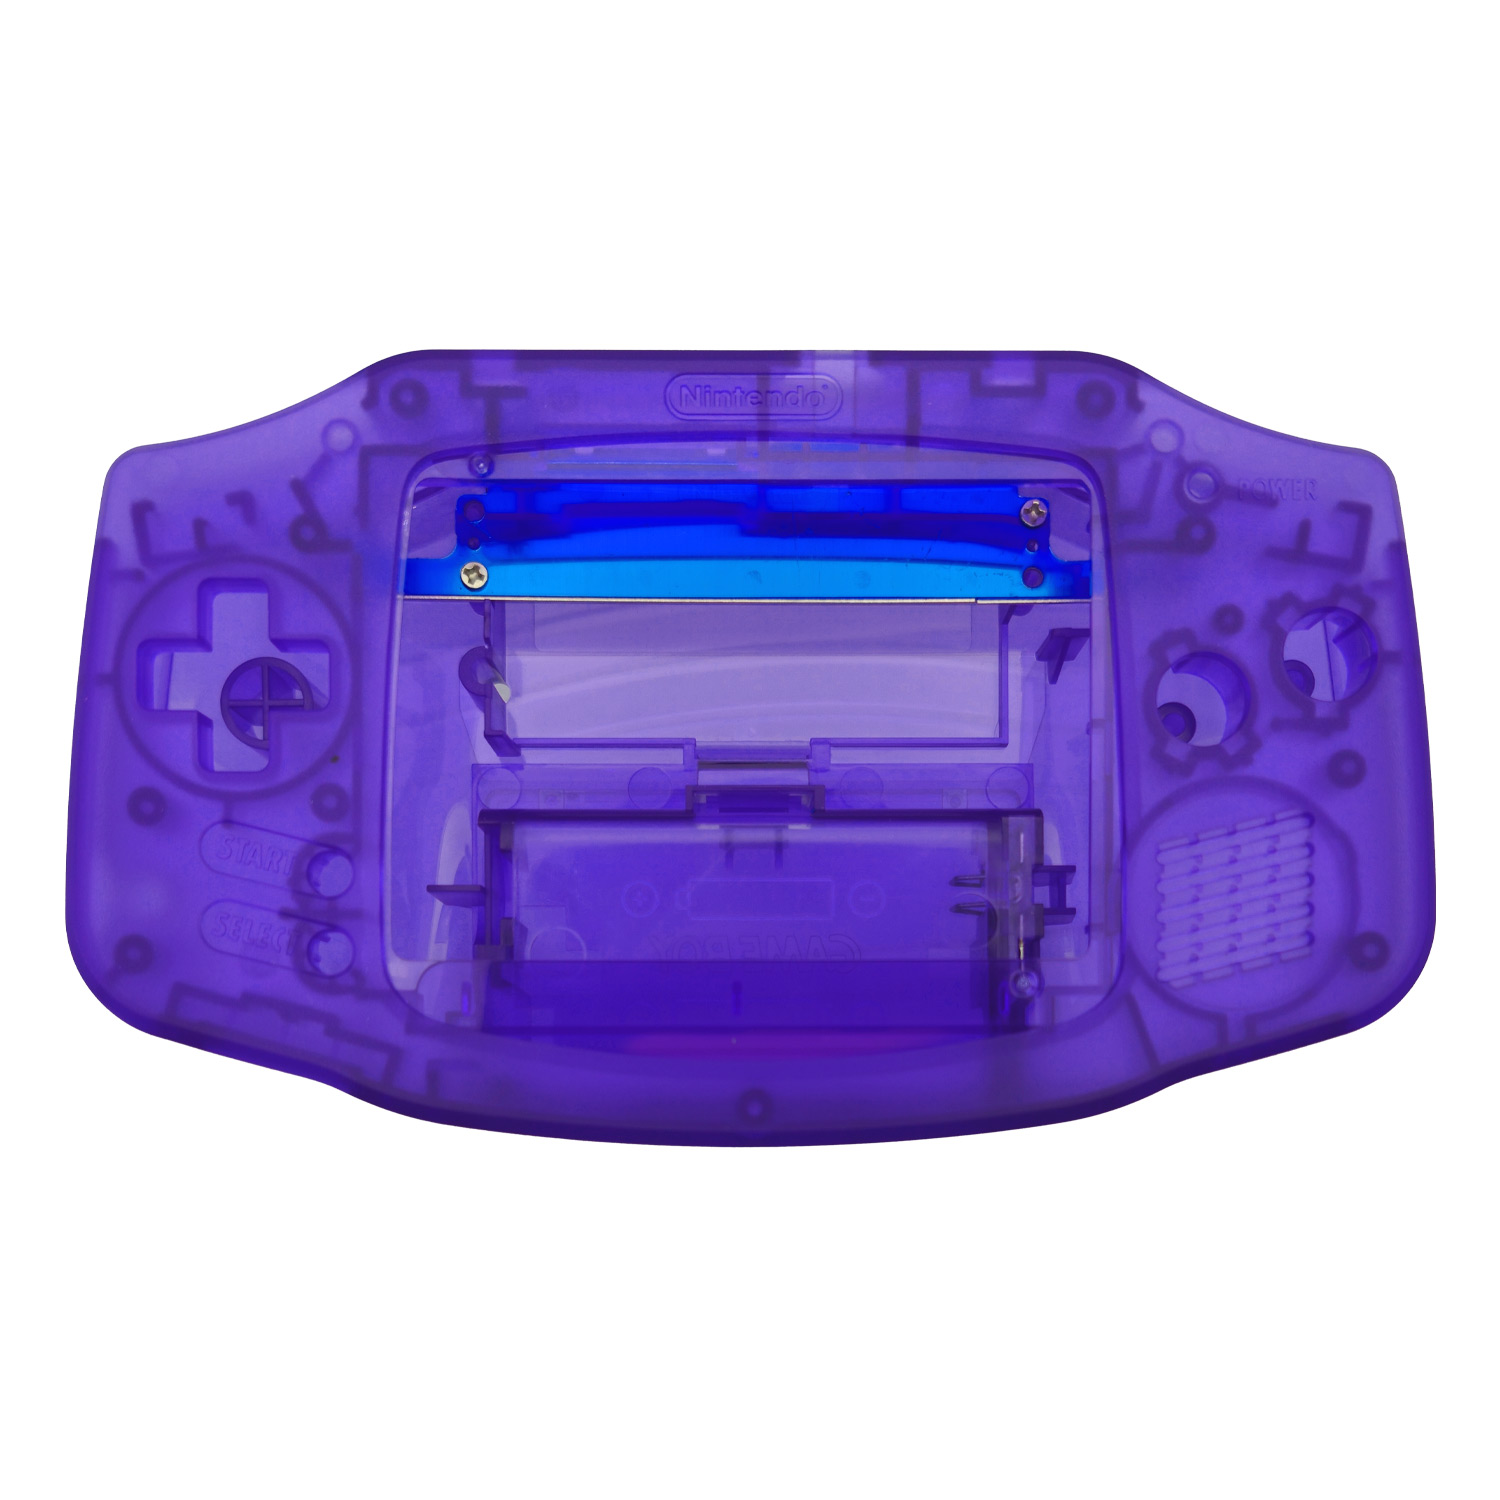 Game Boy Advance Shell (Purple Clear) - SALE